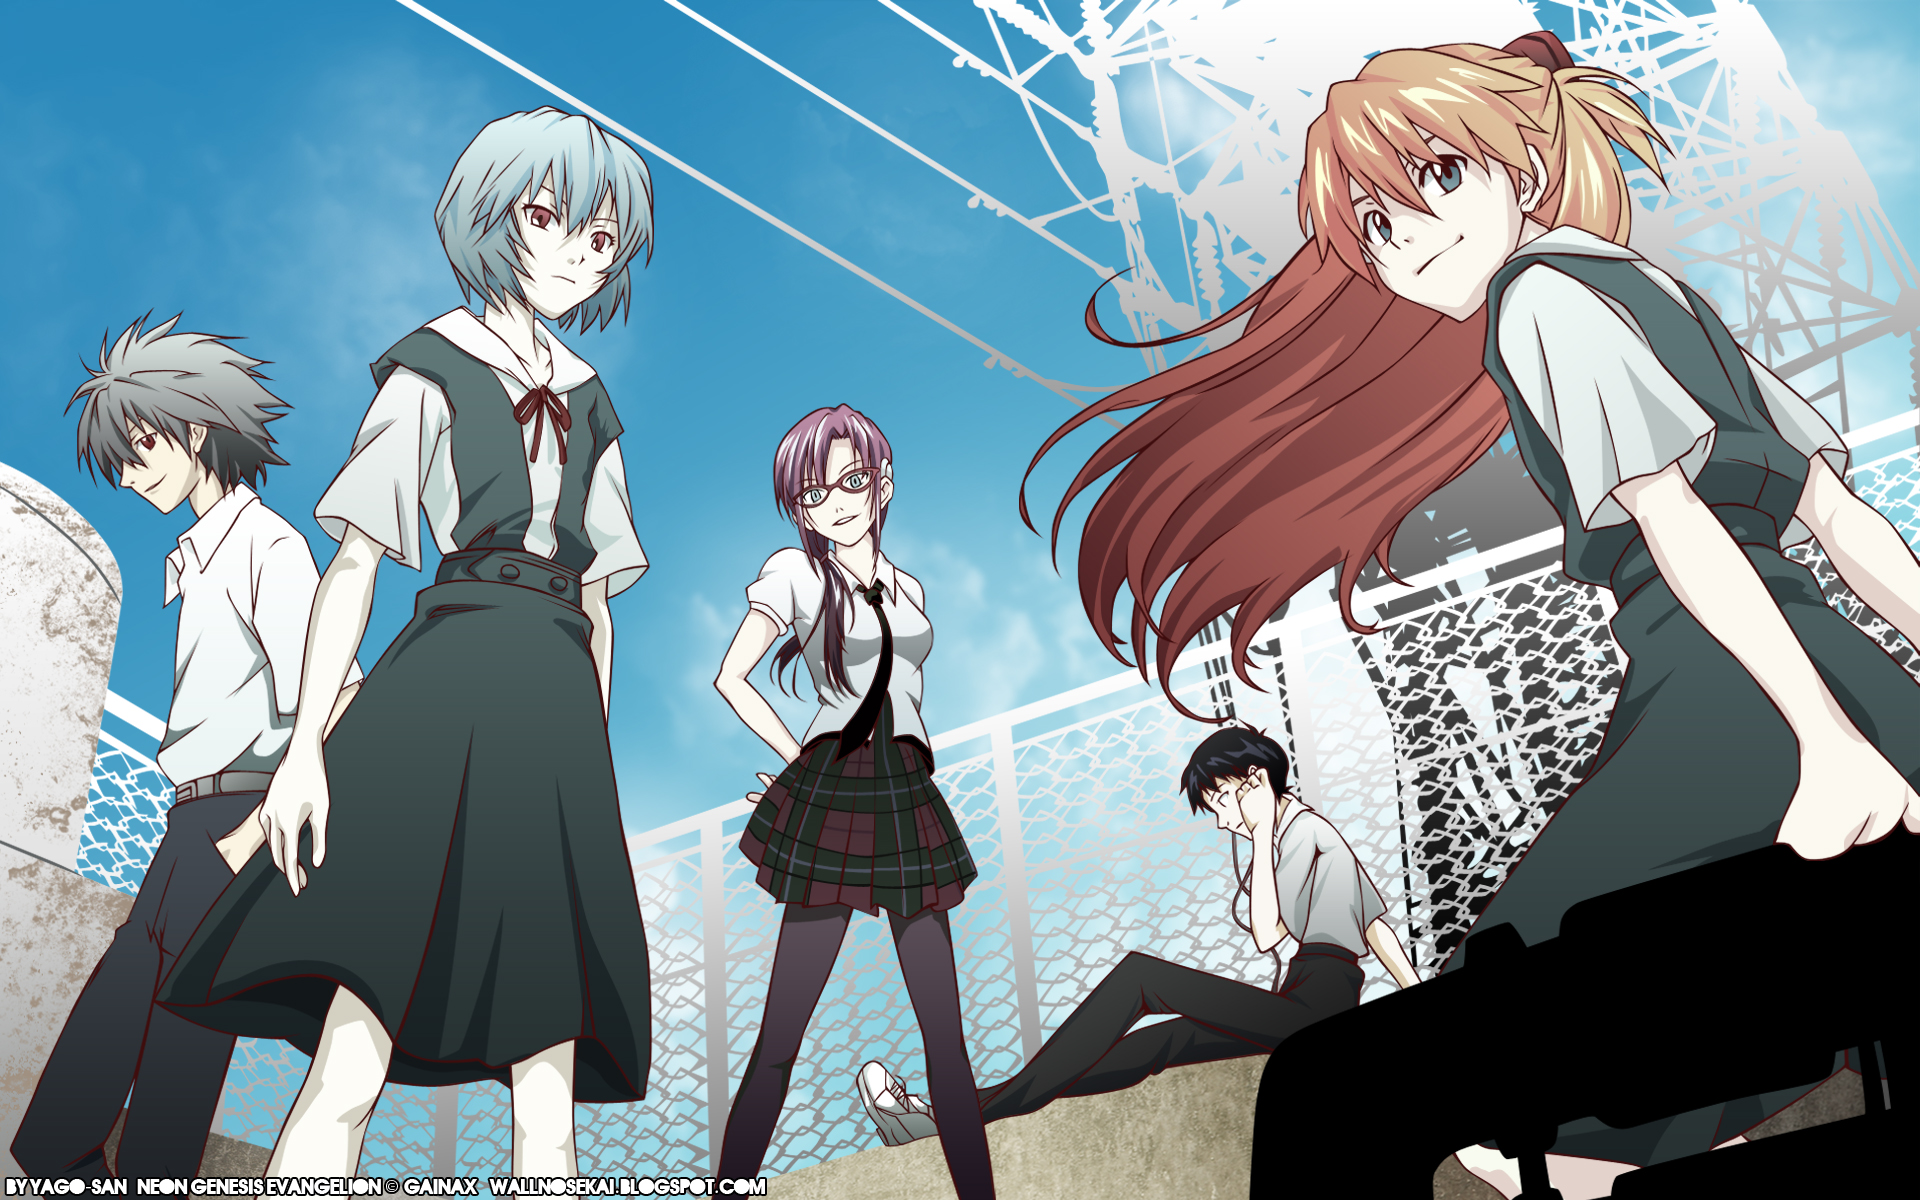 school uniforms, Ayanami Rei, Neon Genesis Evangelion, Makinami Mari Illustrious, Asuka Langley Soryu, anime girls - desktop wallpaper